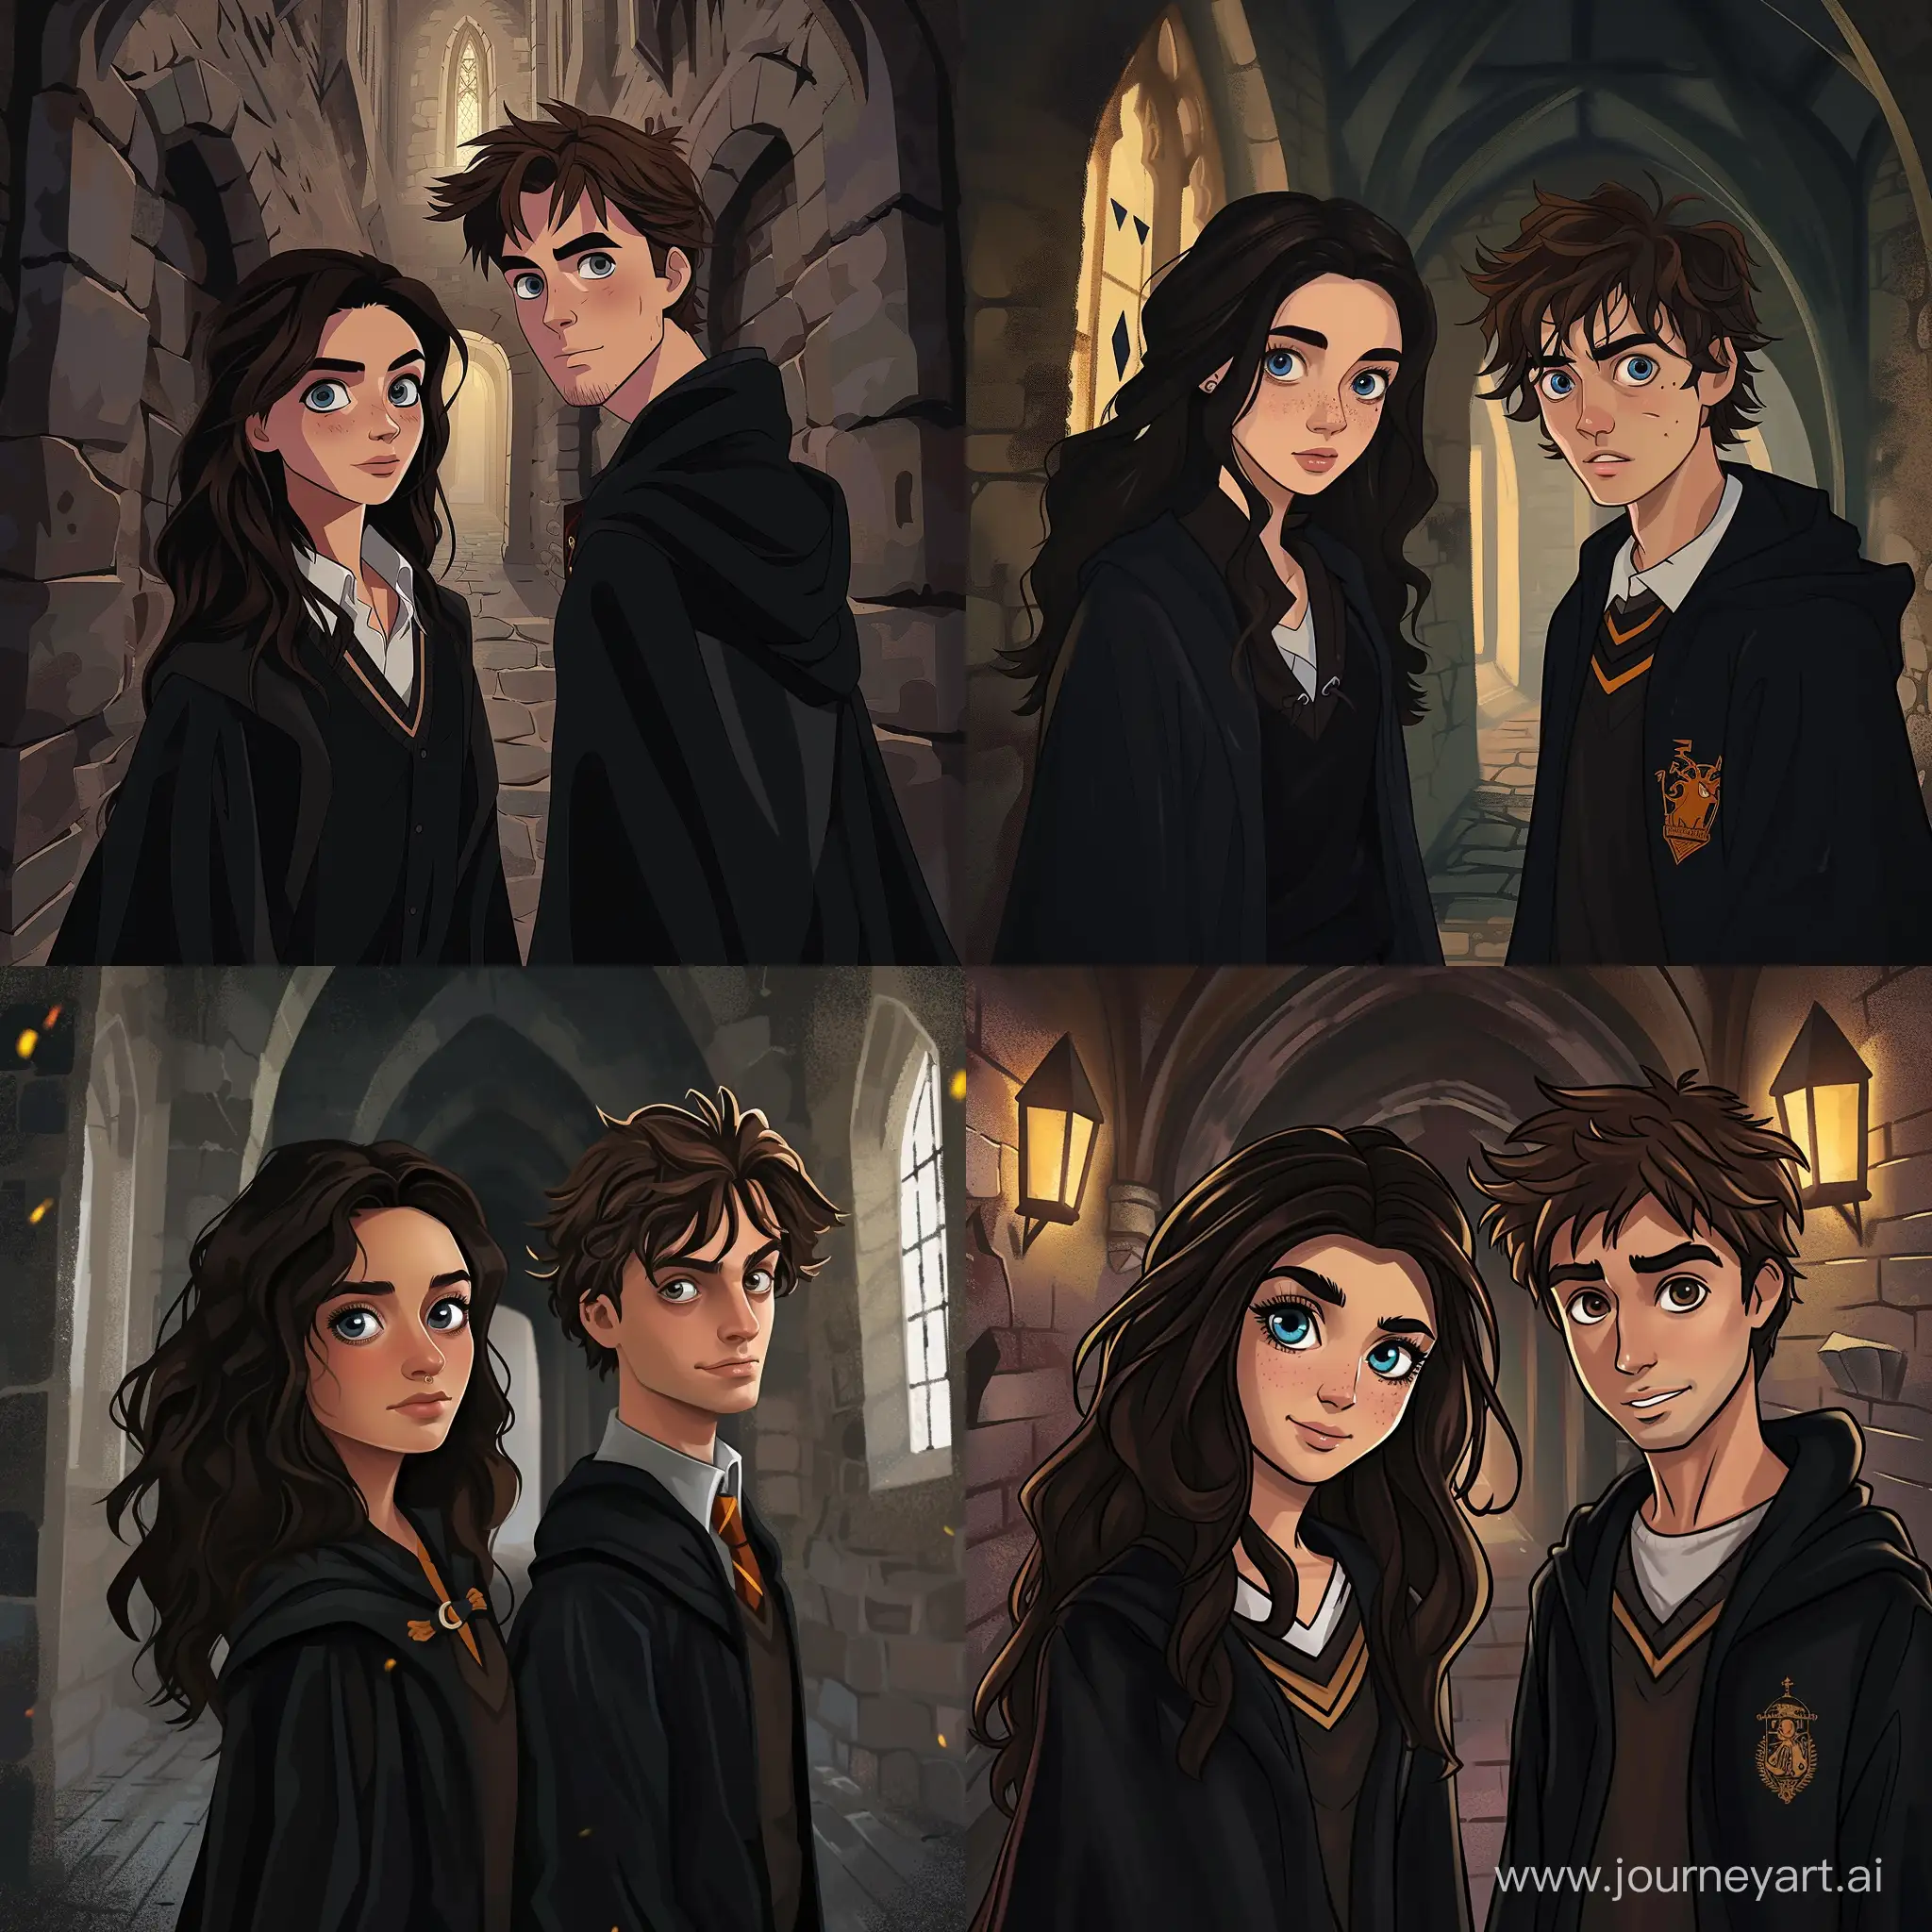 Teenage-Friends-Exploring-Hogwarts-Castle-Corridor-in-Ravenclaw-Robes